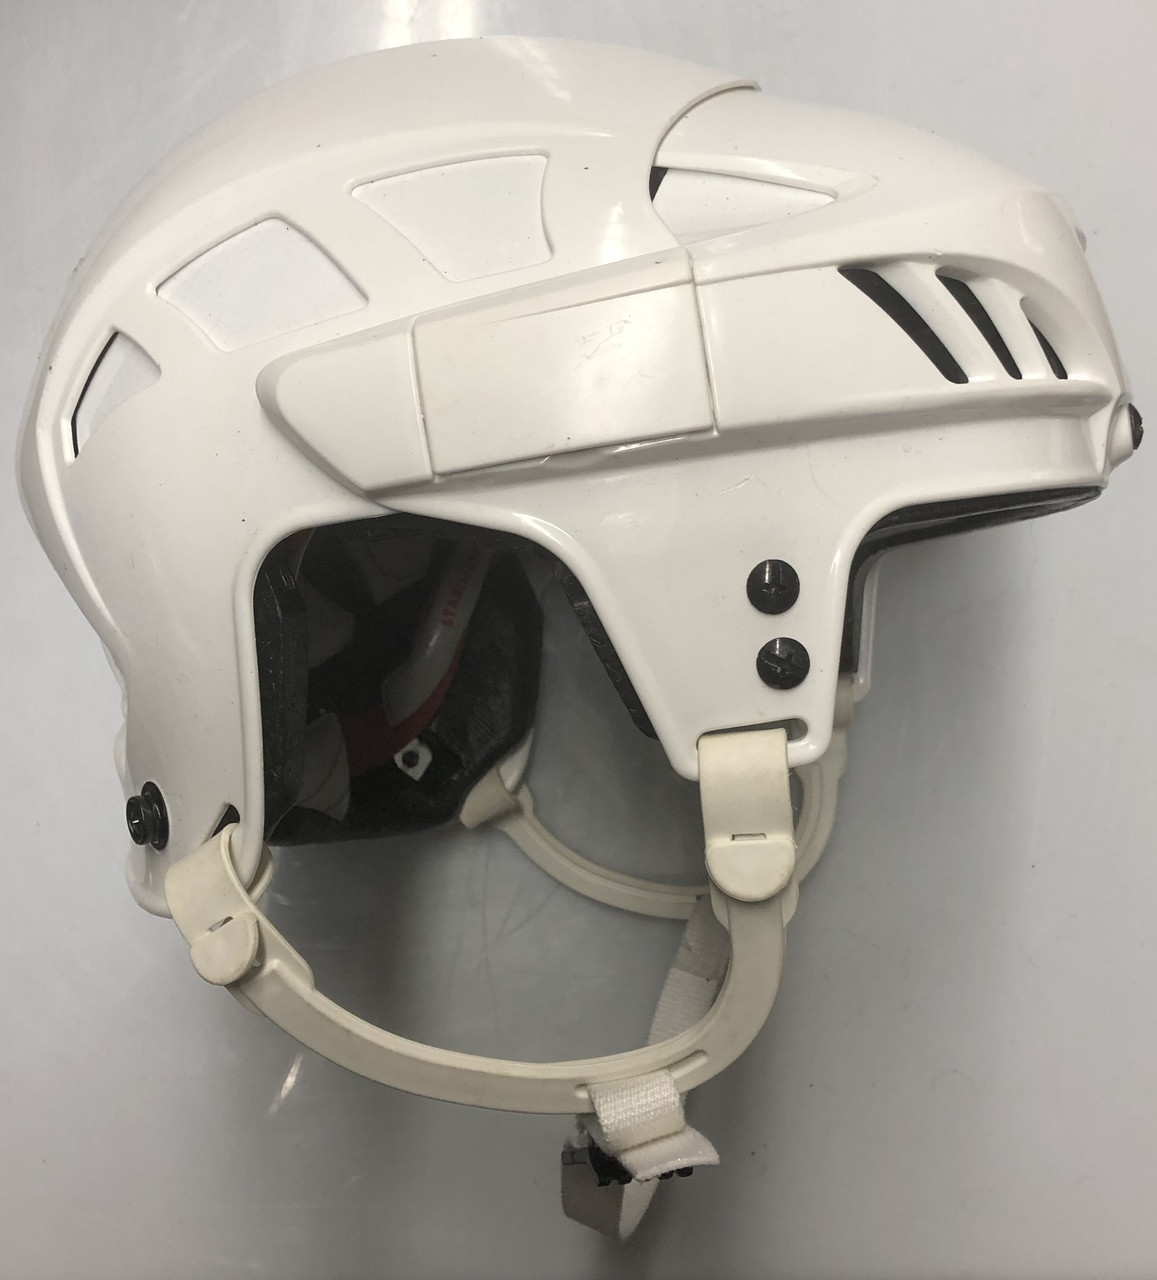 reebok 8k hockey helmet